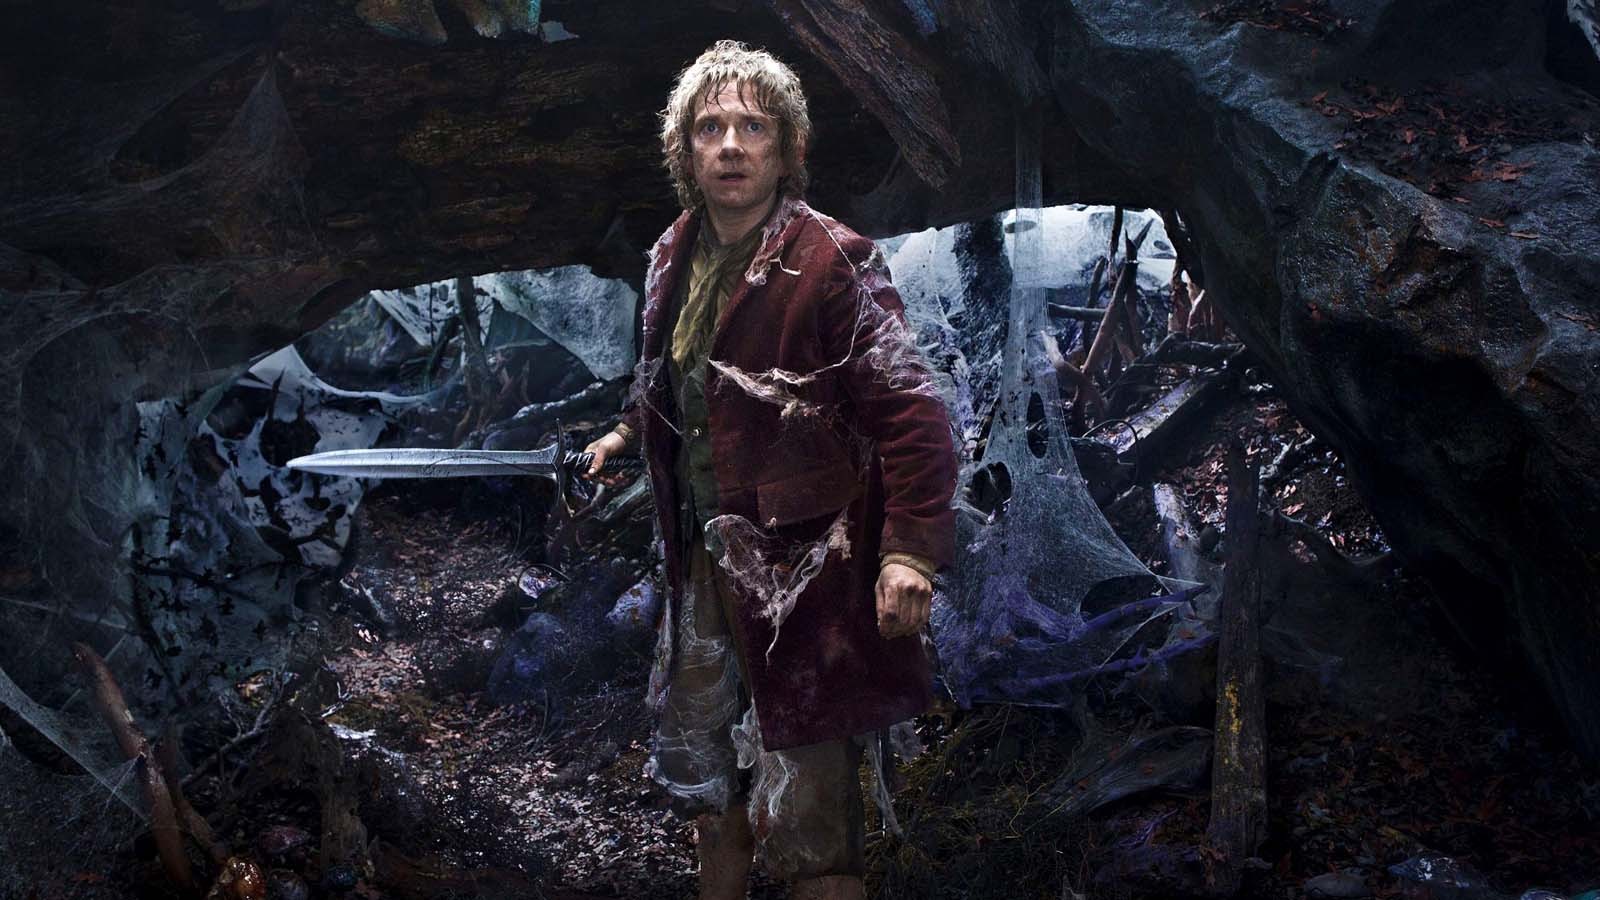 The Hobbit An Unexpected Journey The Hobbit Bilbo Baggins Martin Freeman 1600x900